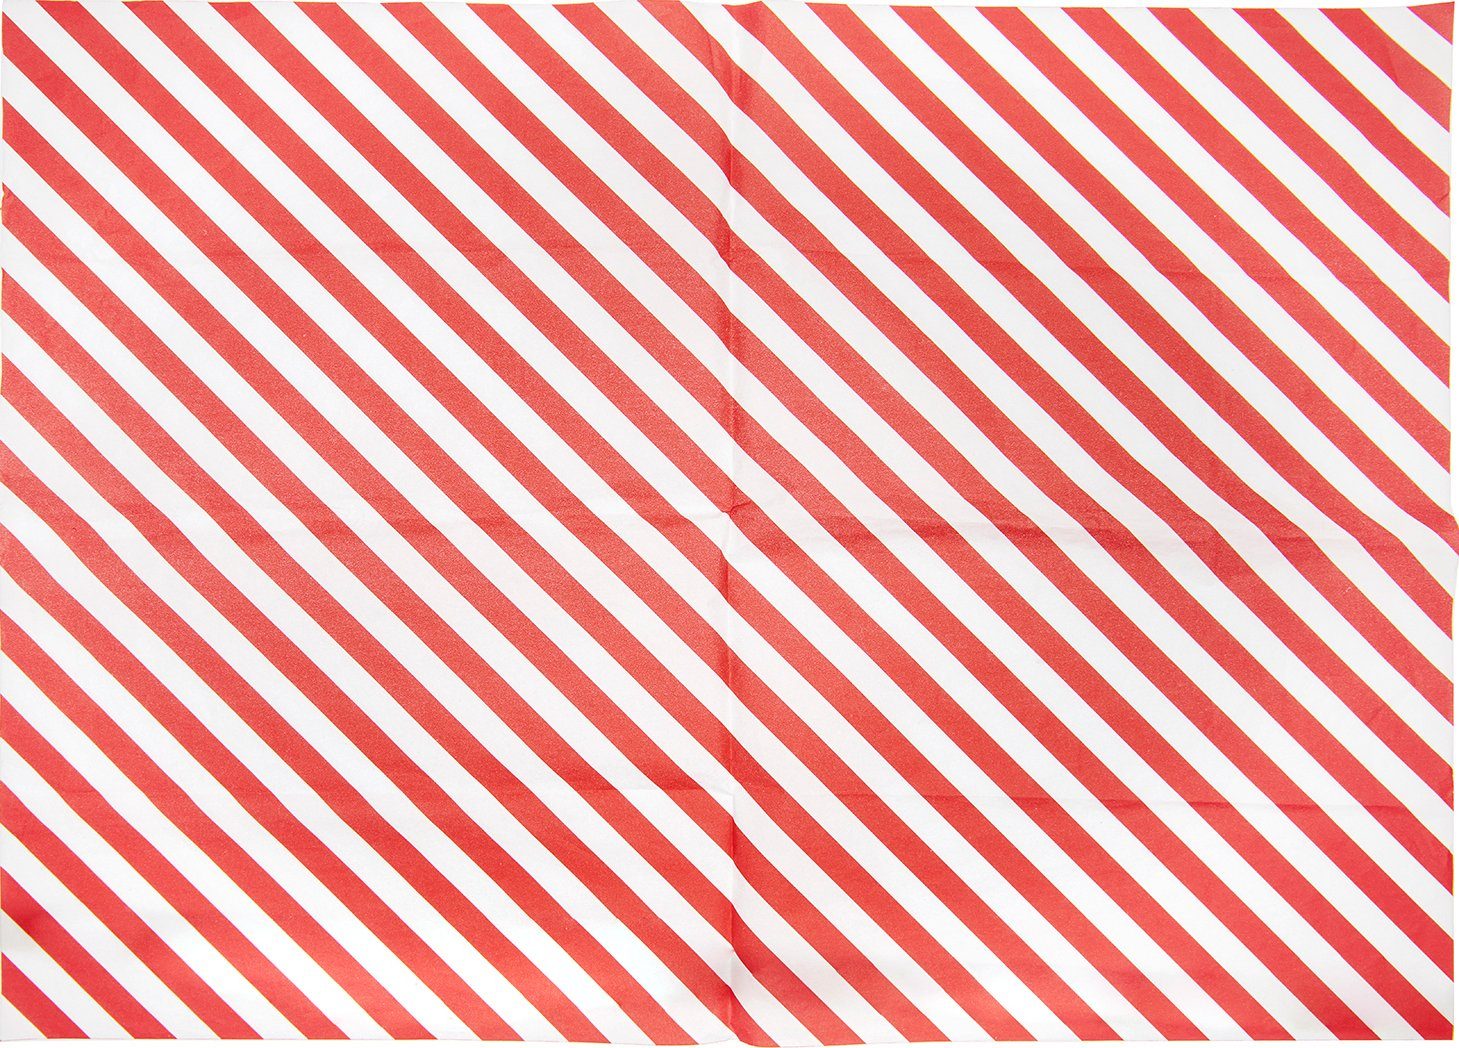 Seidenpapier 70 Seidenpapier x Design Bögen 5 50 Rot/Weiß Streifen, Rico cm cm